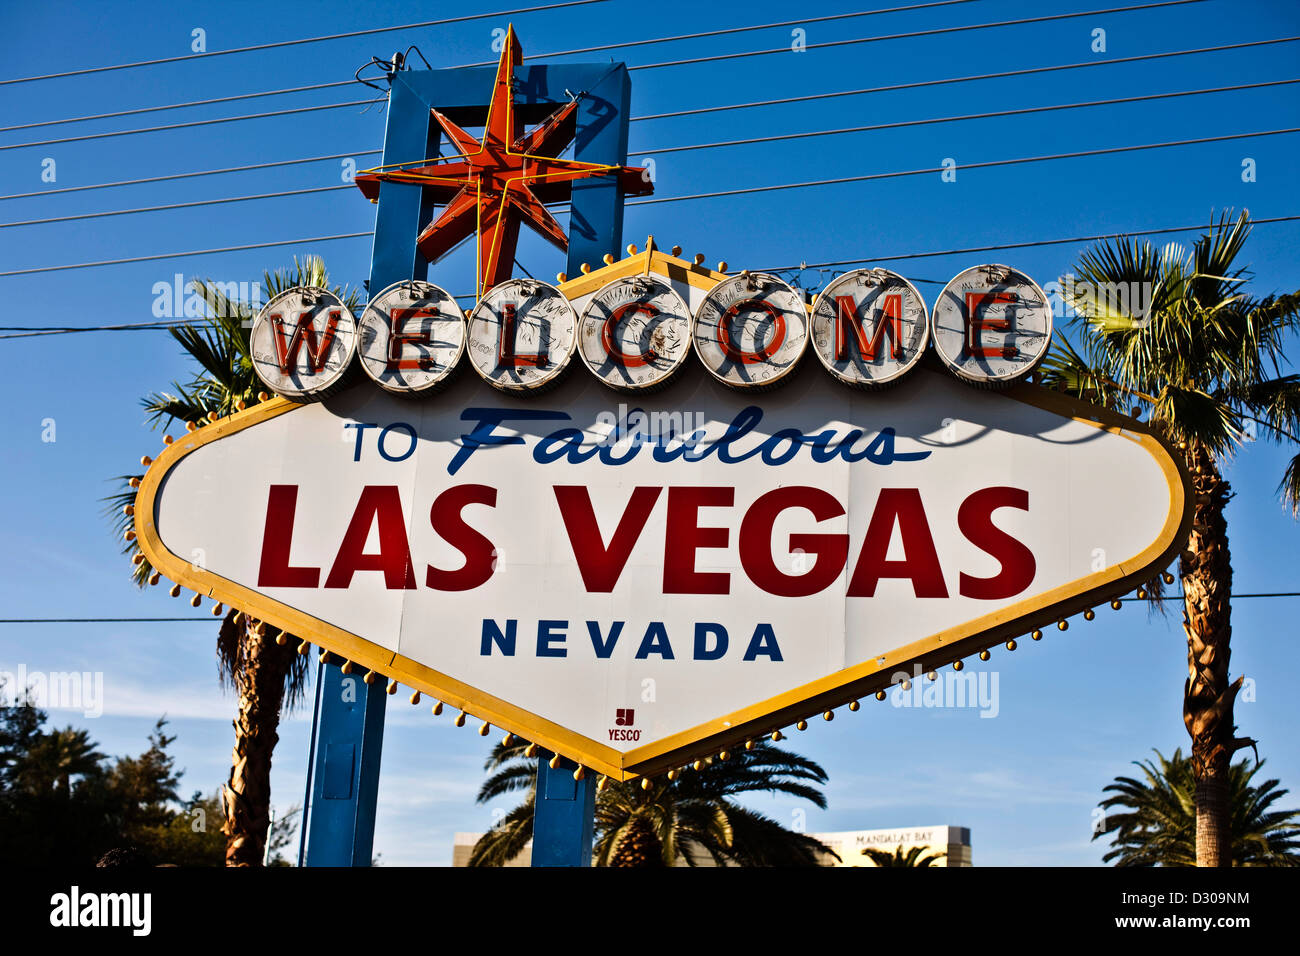 Las Vegas Welcome sign, Las Vegas, Nevada, USA Stock Photo